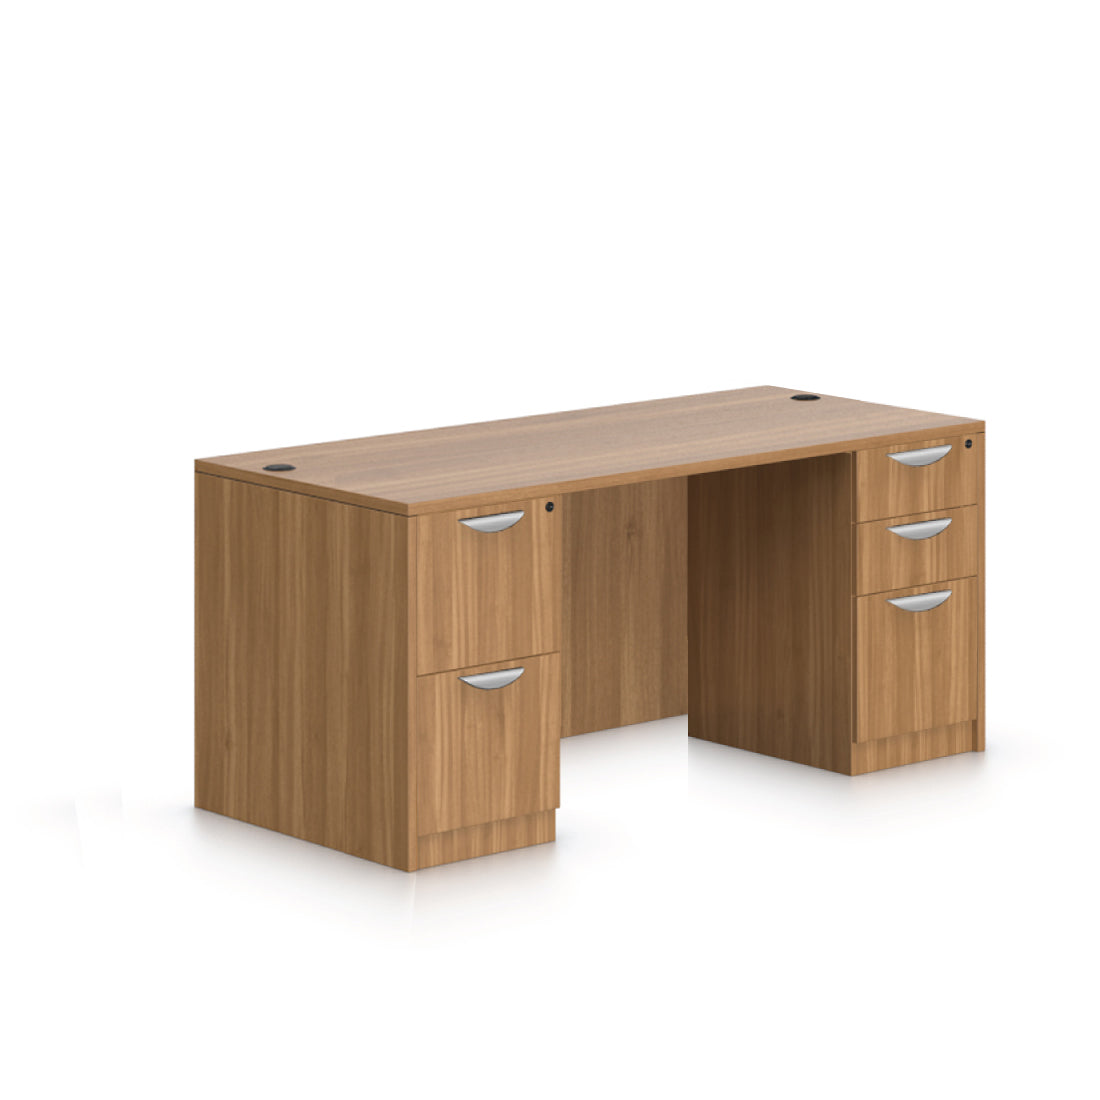 66"x30" Rectangular Desk with B/B/F pedestal and F/F Pedestal - Kainosbuy.com